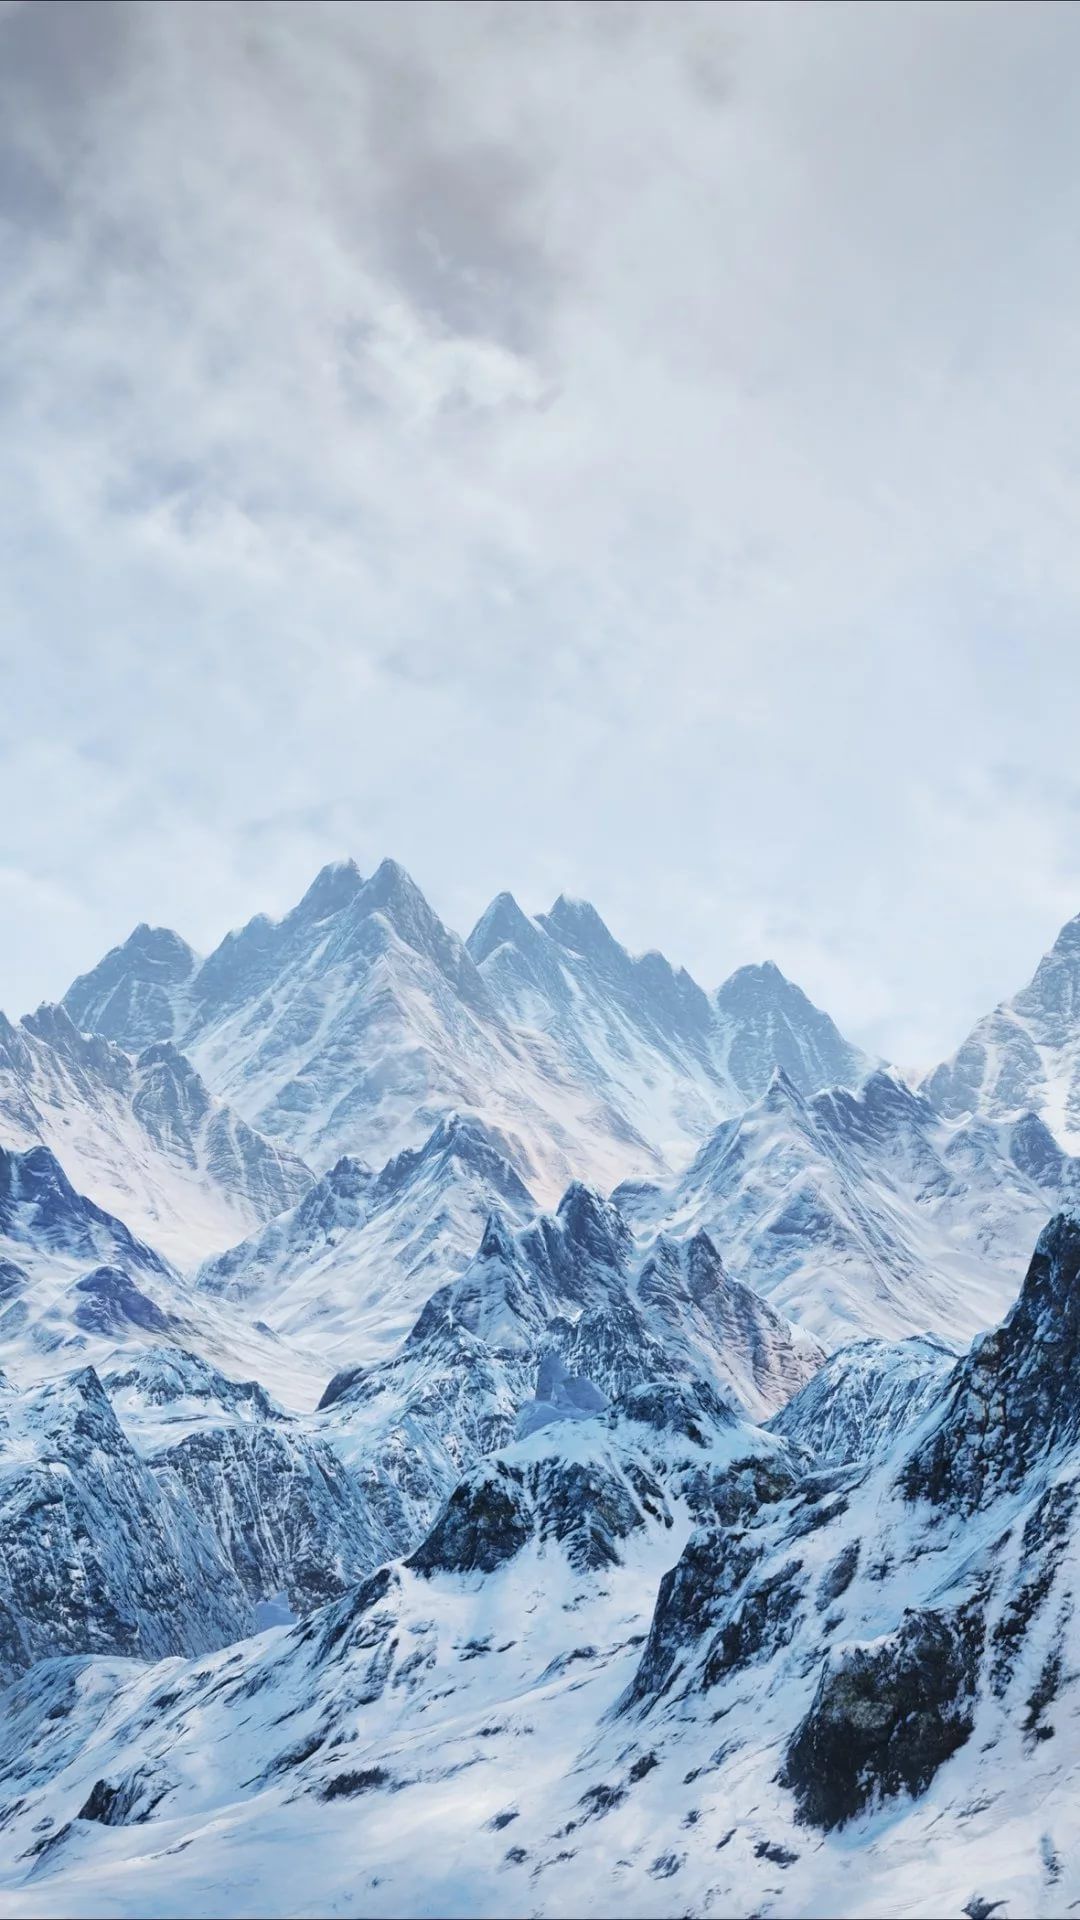 1080P Mountain Wallpapers